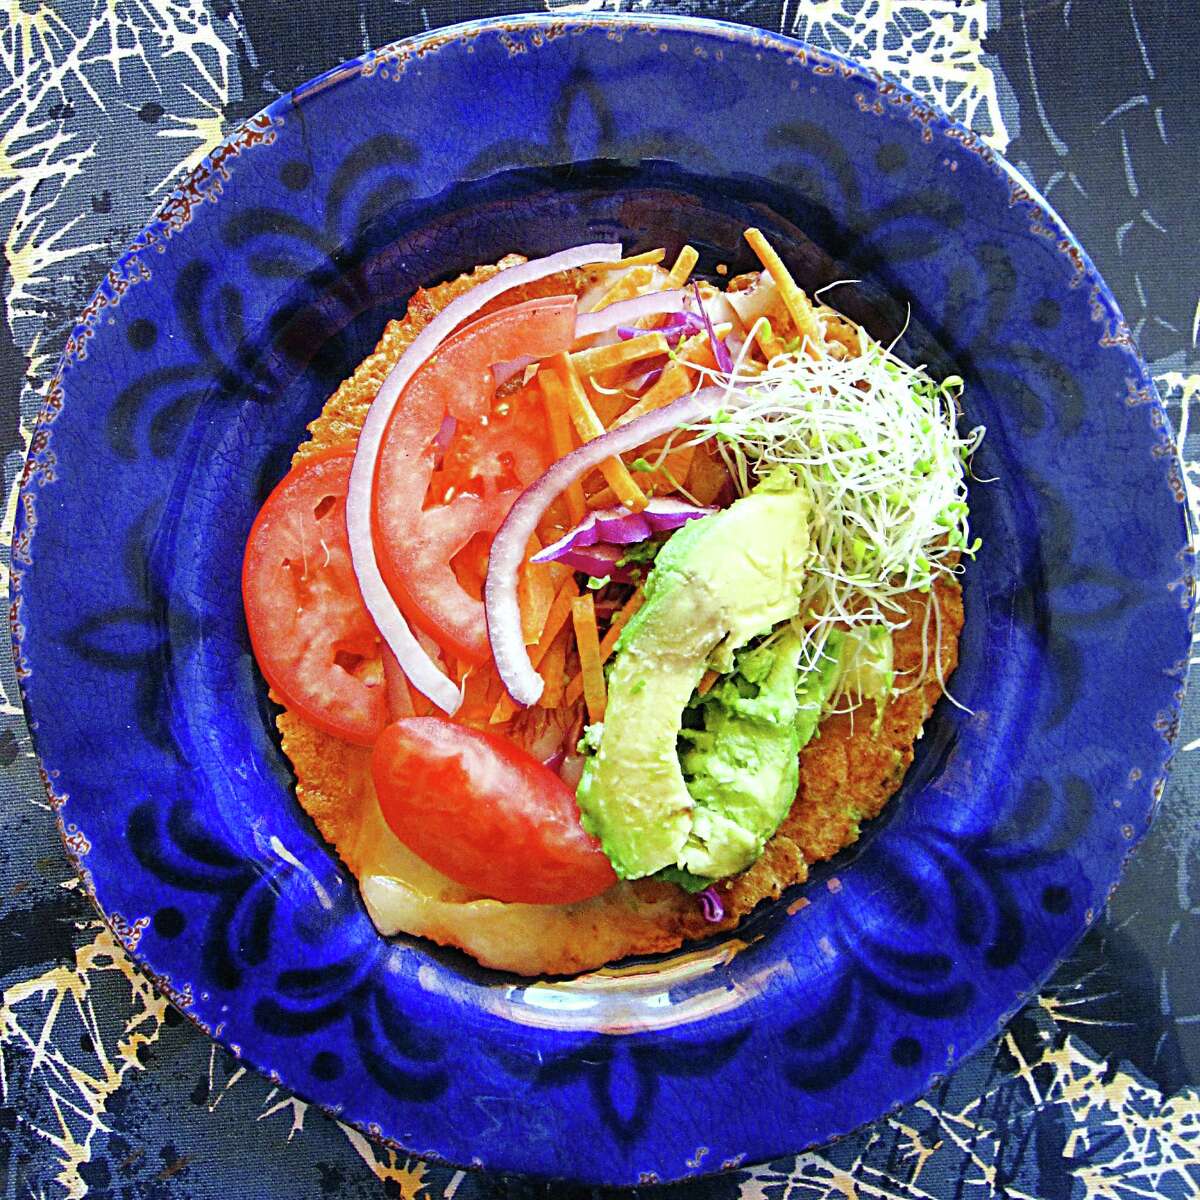 A veggie taco on a handmade red masa tortilla from Adelante.